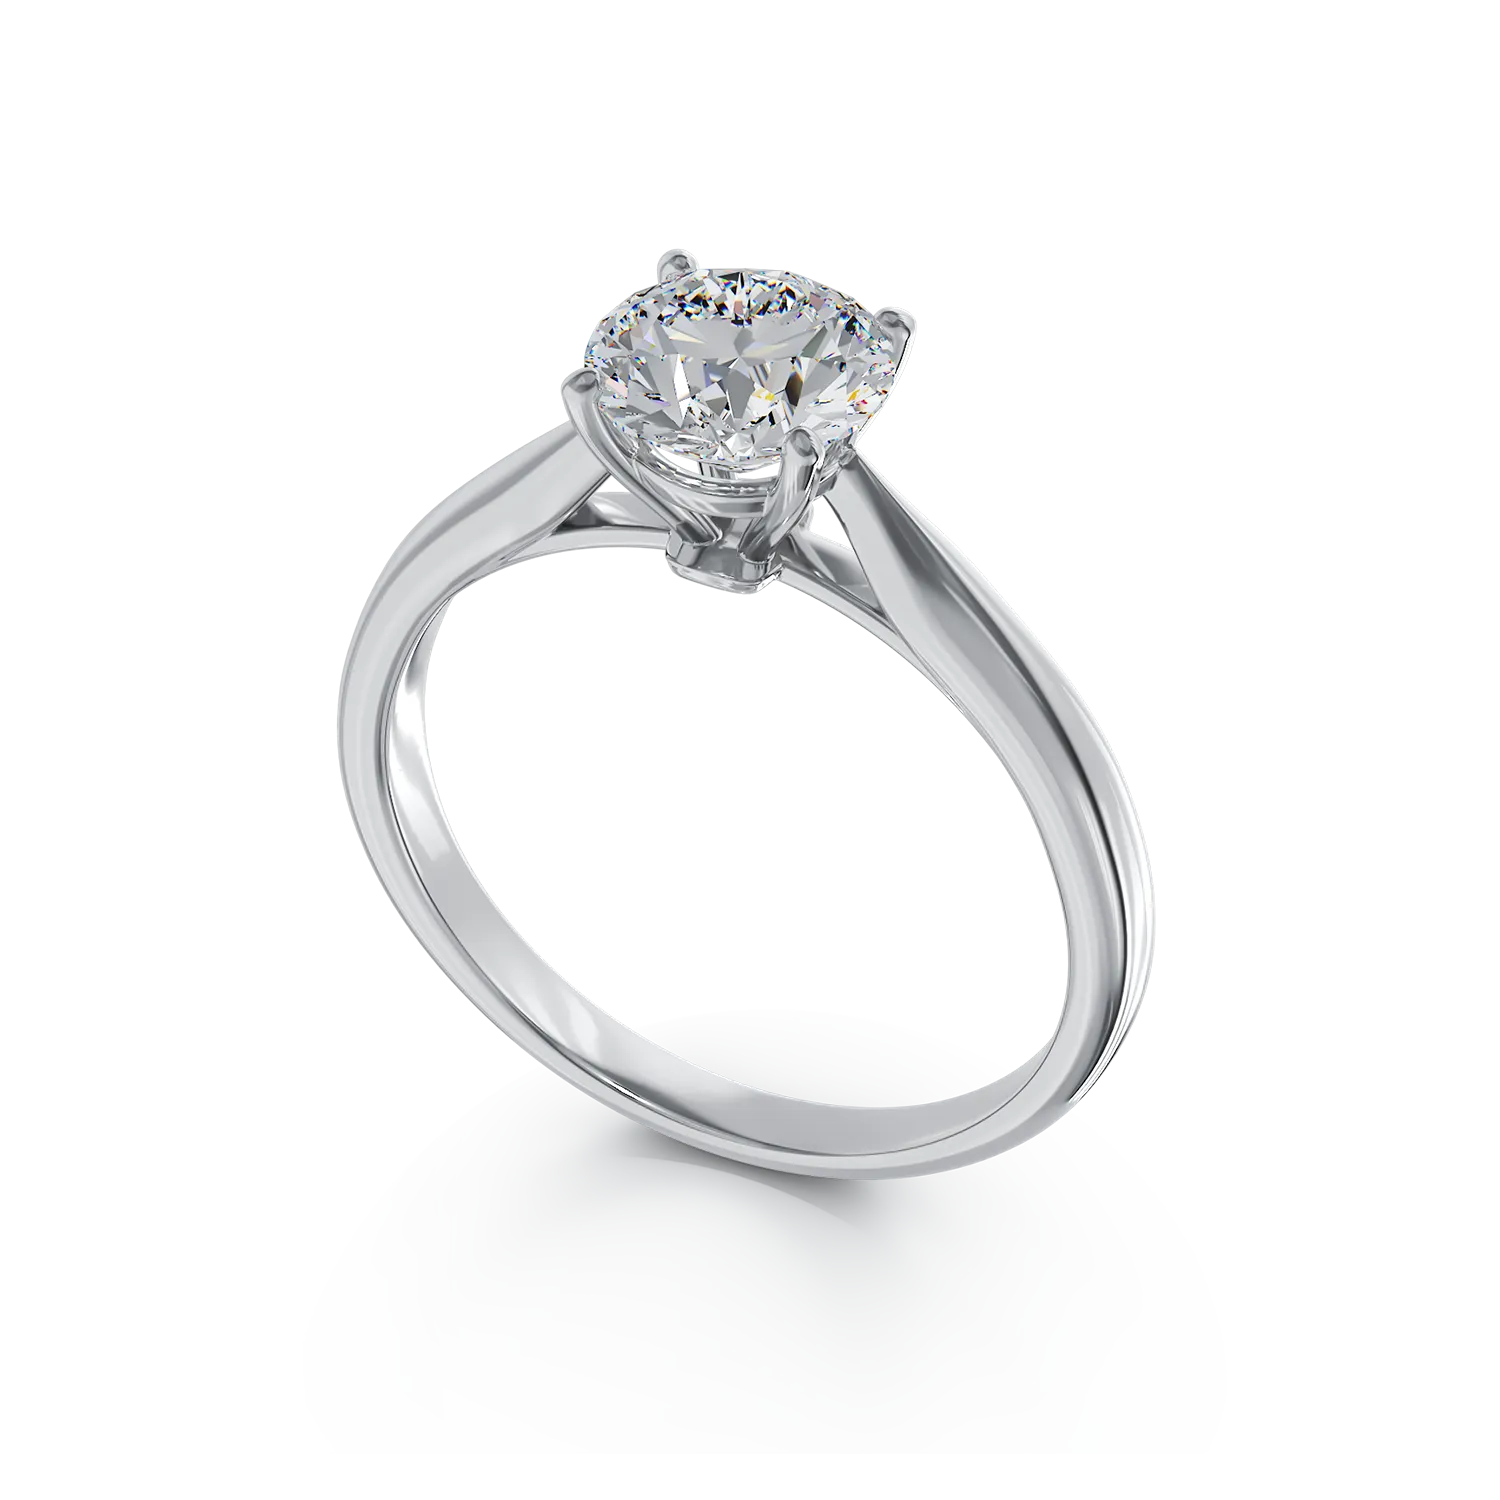 Inel de logodna din aur alb de 18K cu diamant solitaire de 0.9ct